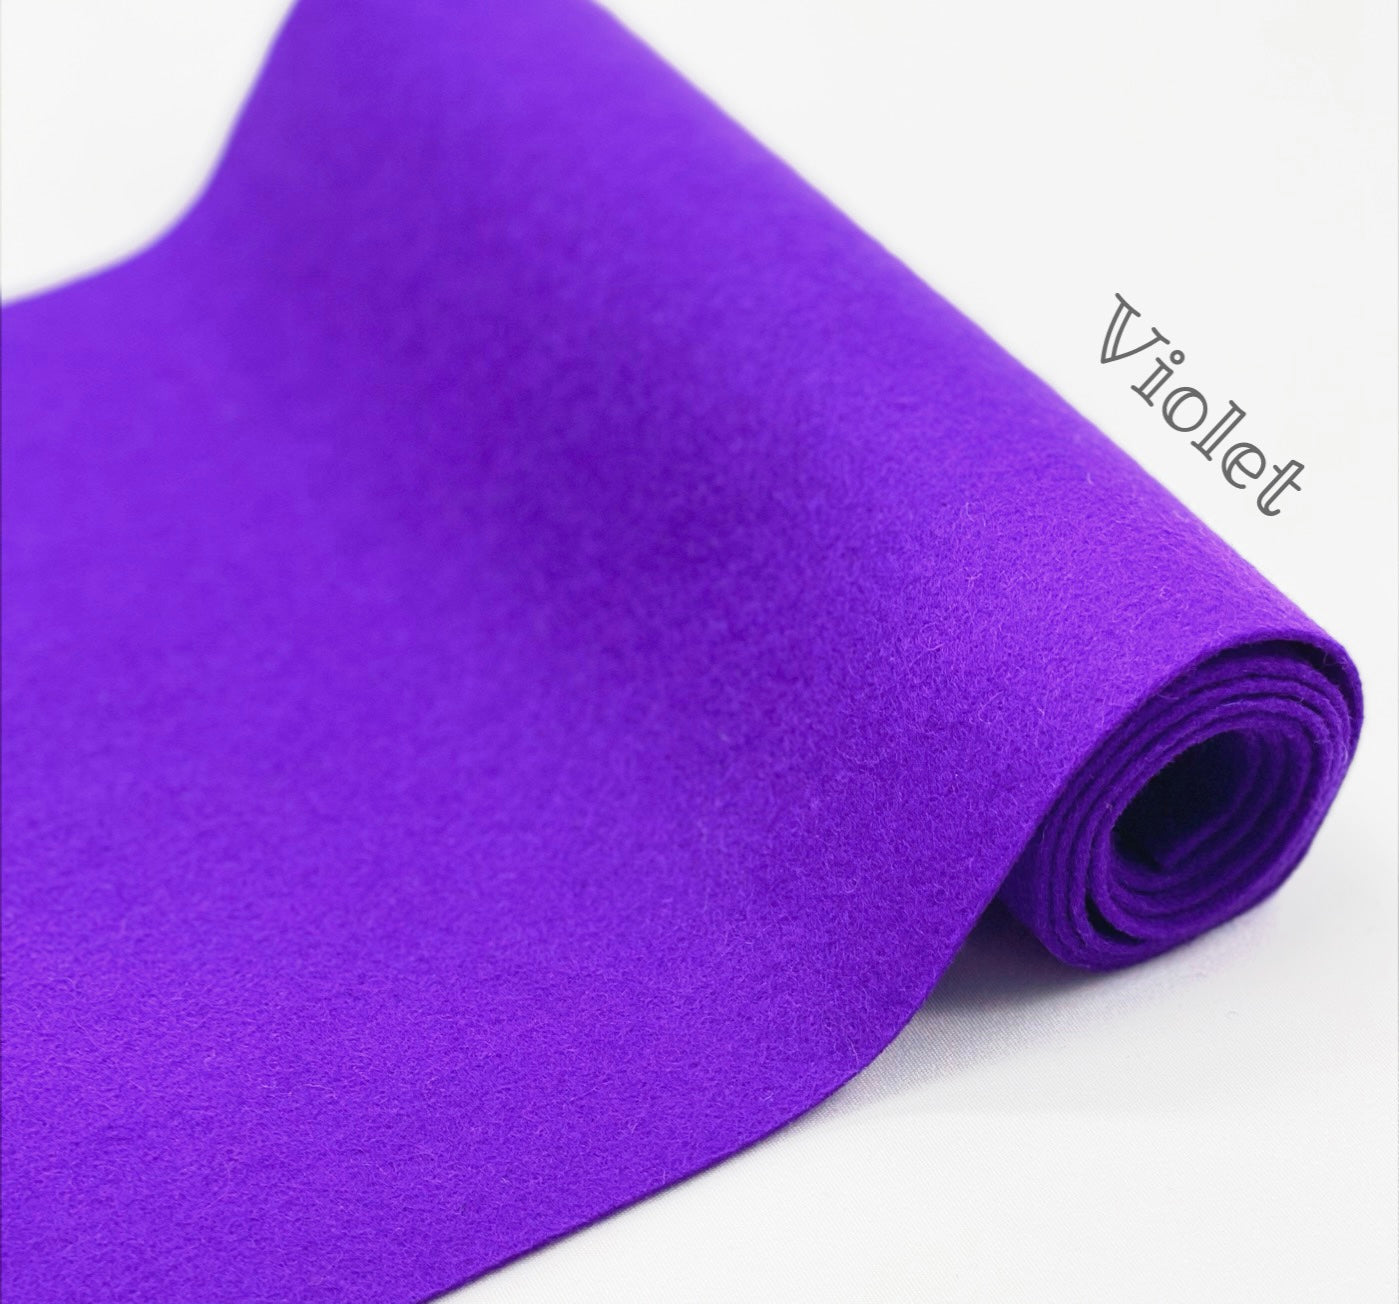 All the Purples - 100% Wool Felt - 7 shades